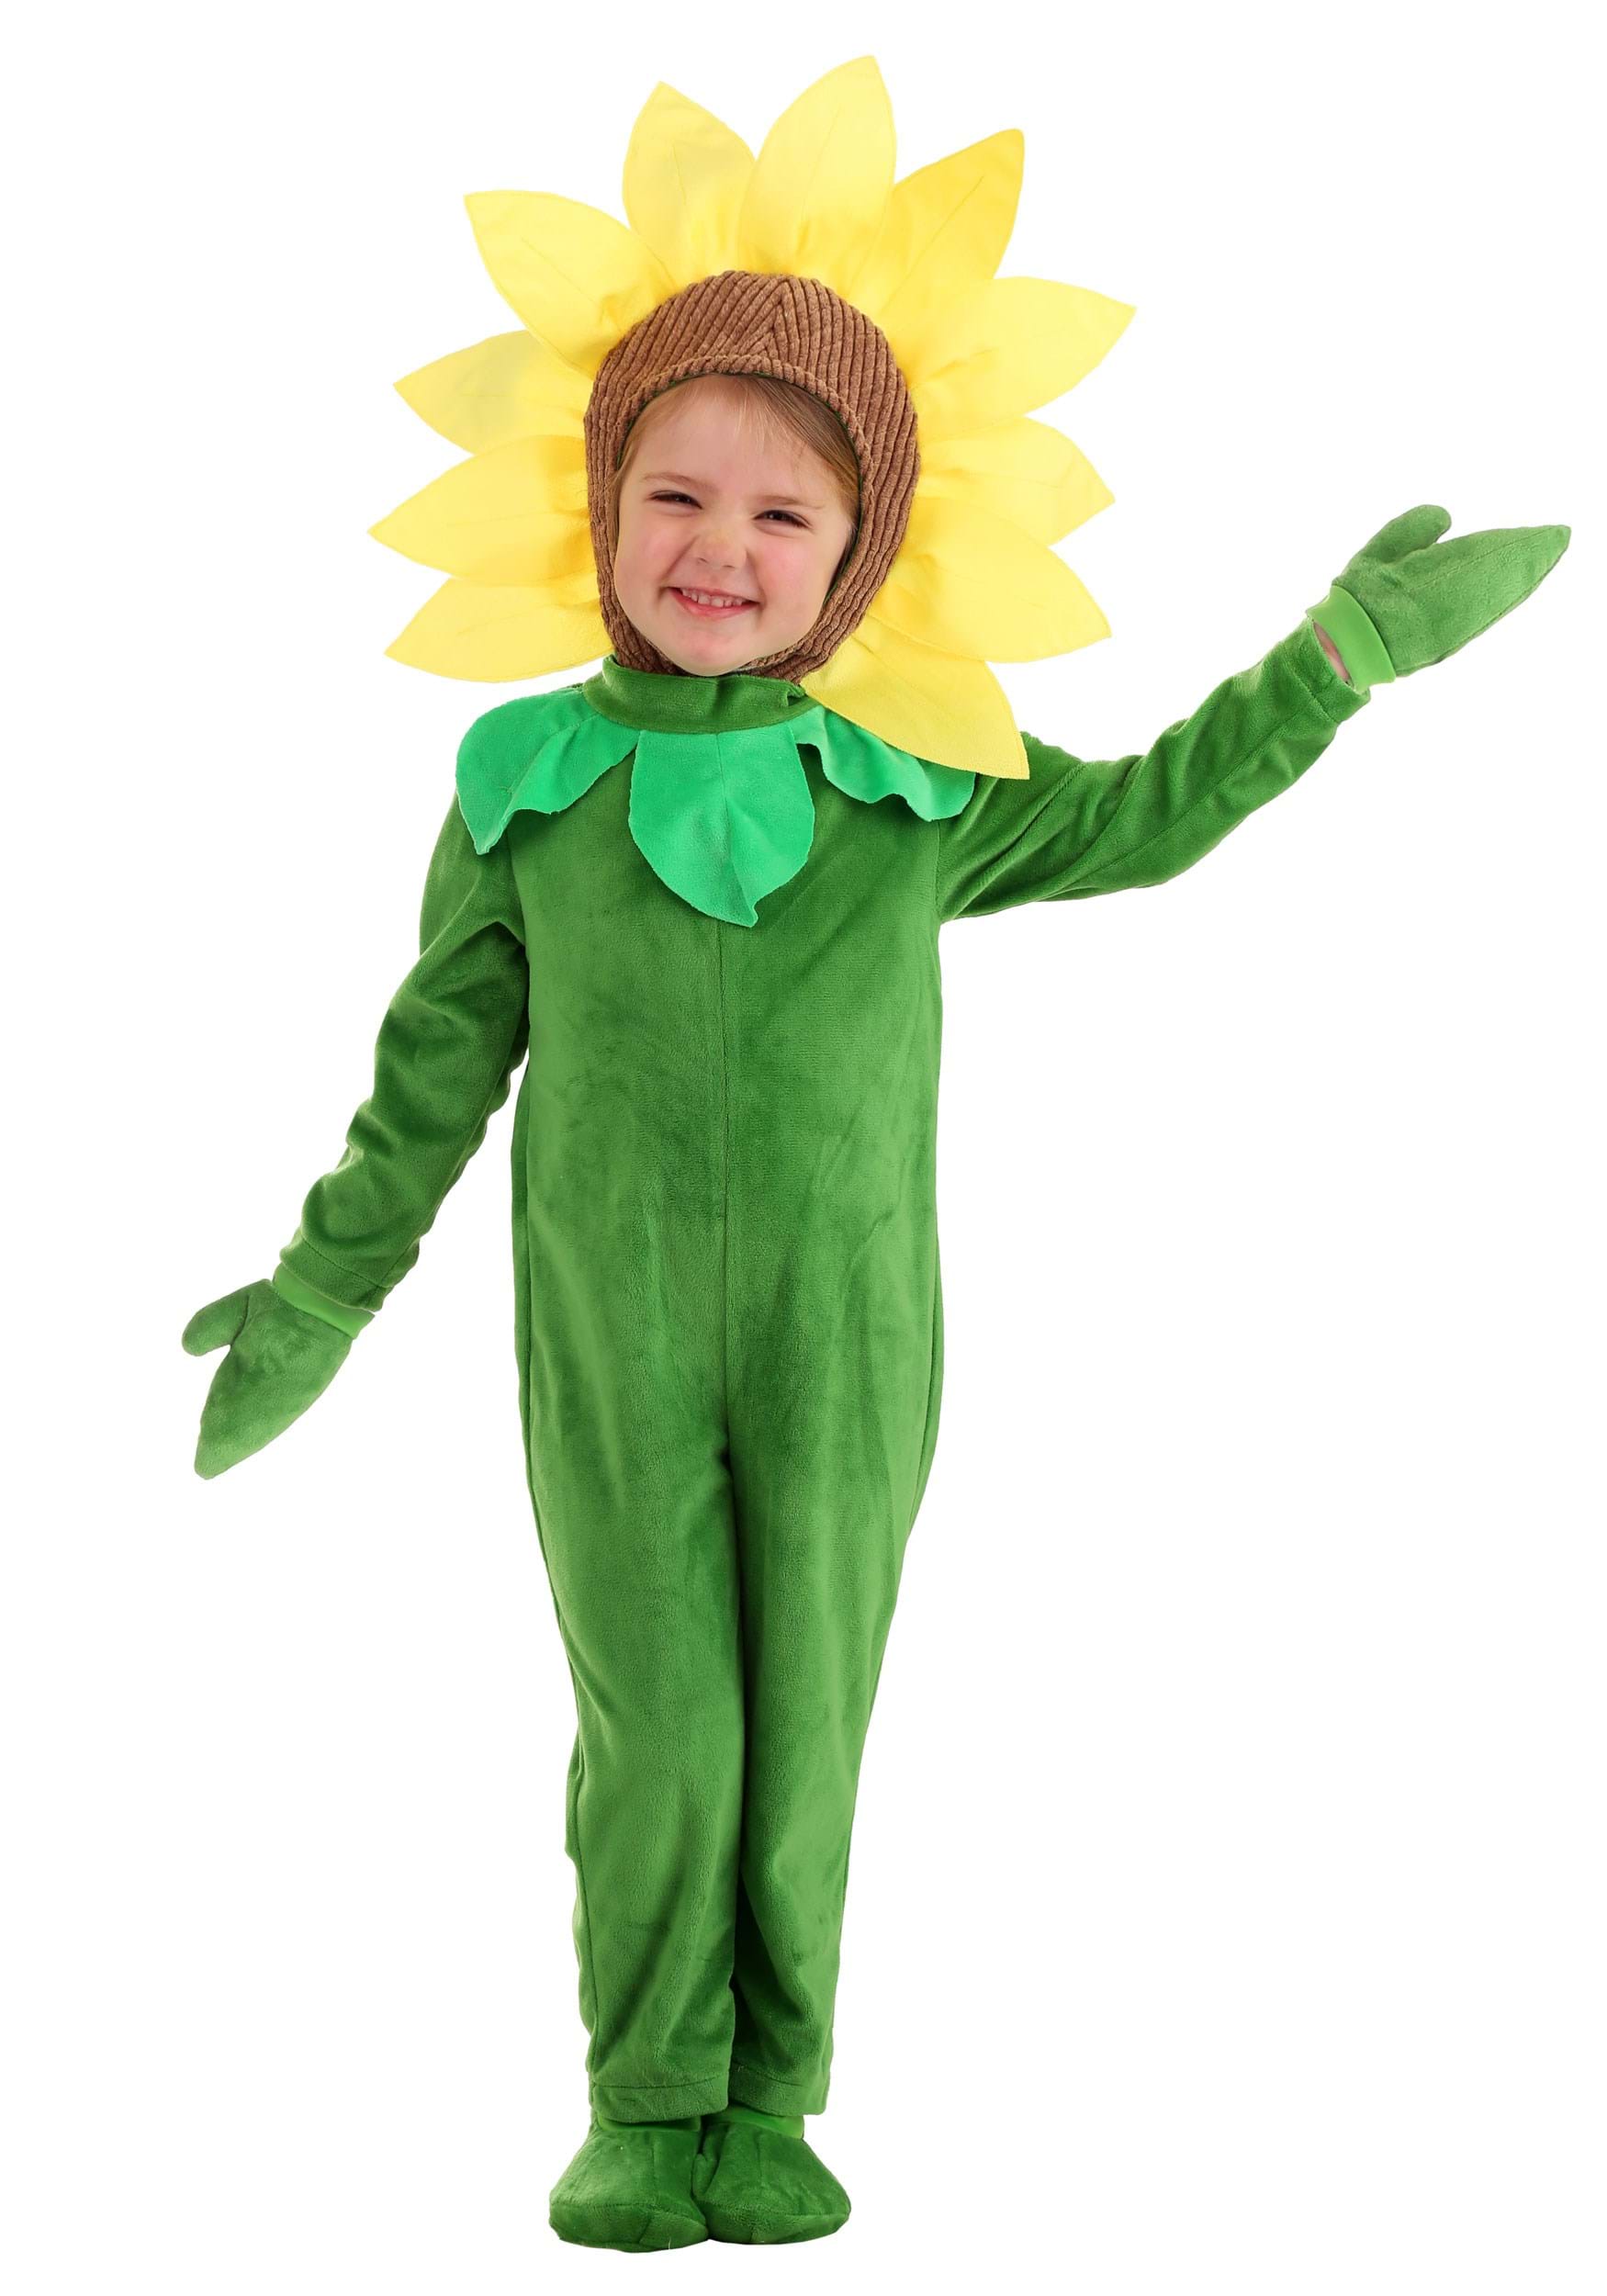 Photos - Fancy Dress Toddler FUN Costumes Flower  Costume Green/Yellow FUN0911TD 